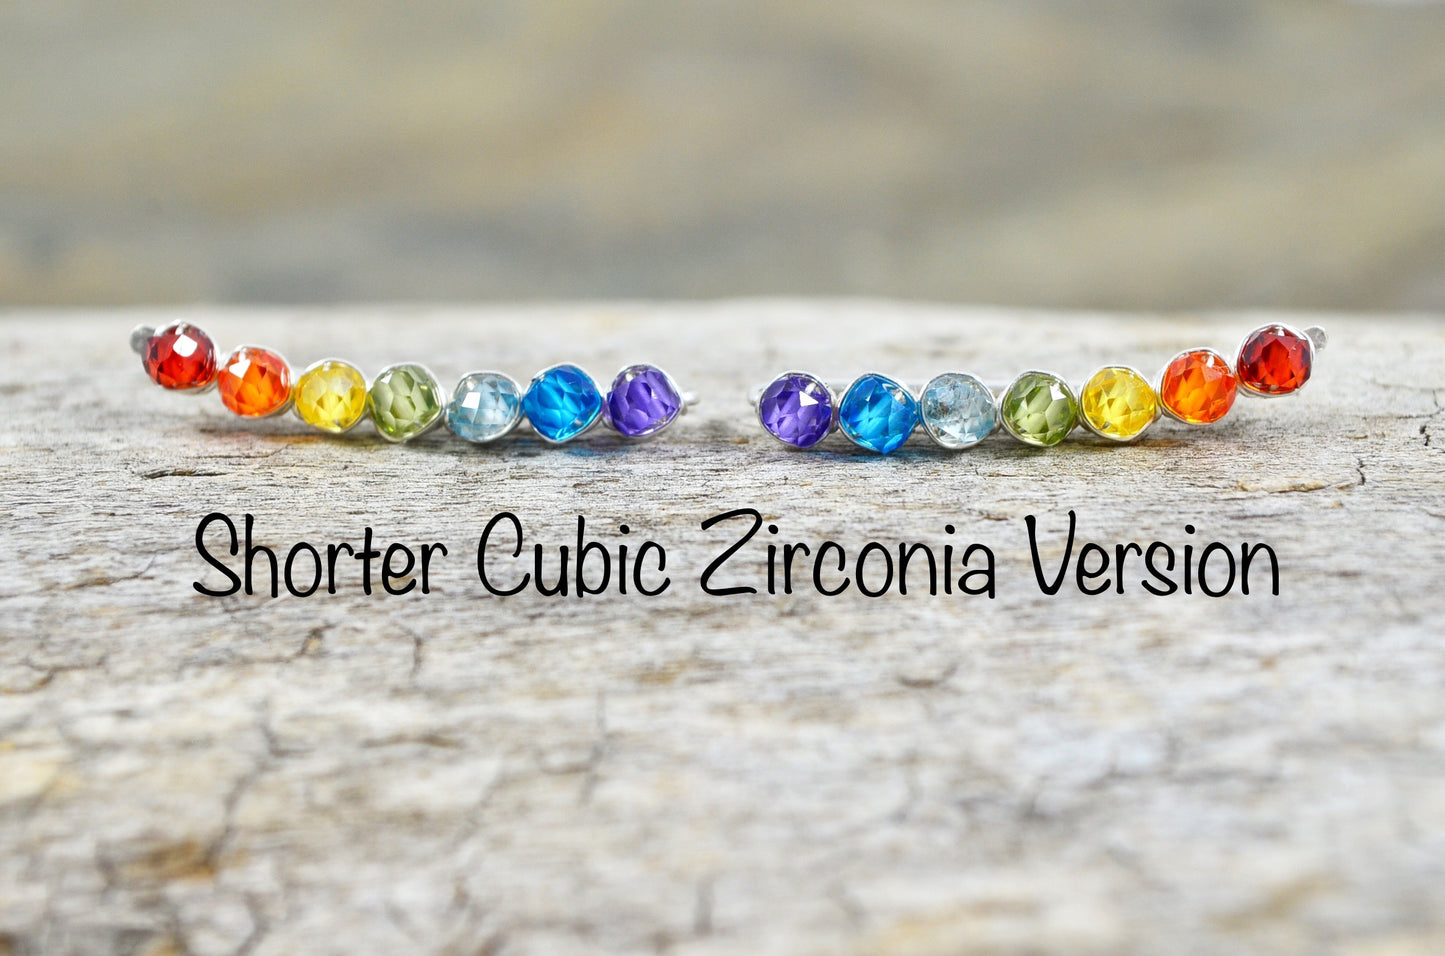 Rainbow Gemstone Ear Climbers in Sterling Silver or 14k Gold Fill, cubic zirconia pride lgbtq earrings